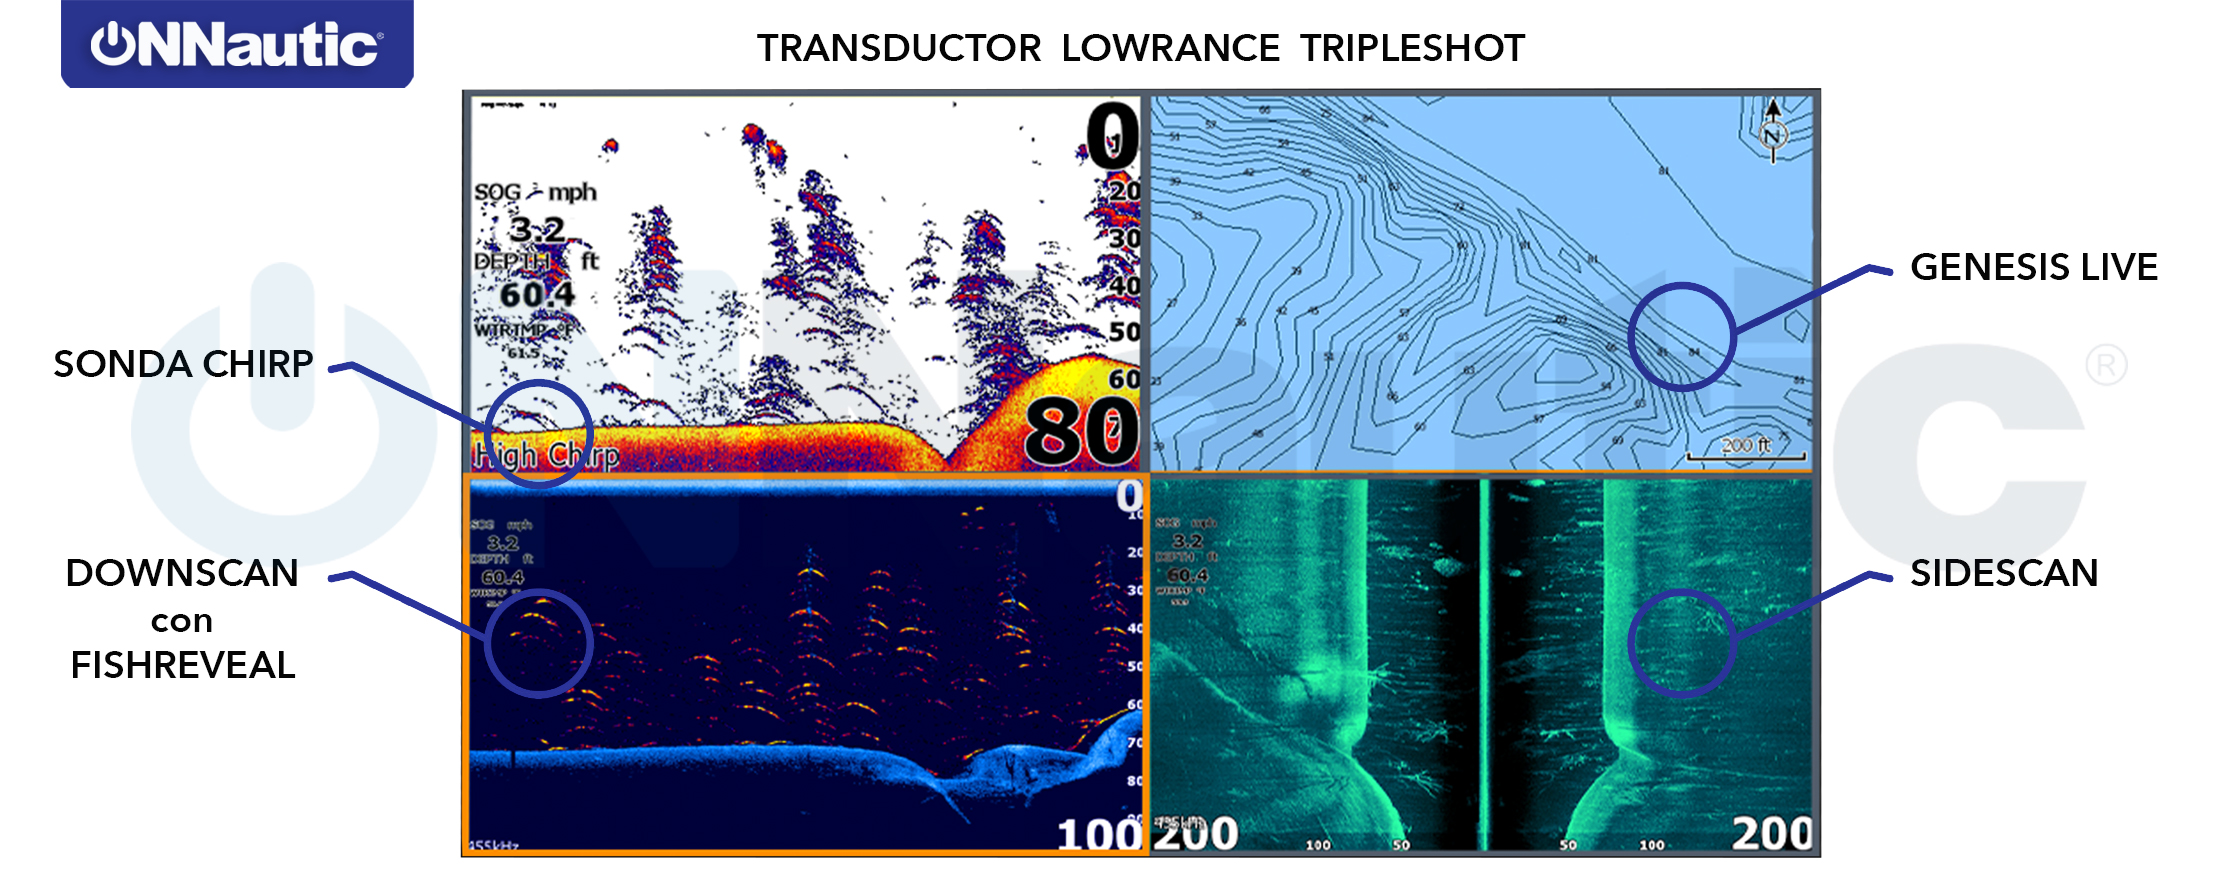 Transductor TripleShot Lowrance. ONNautic